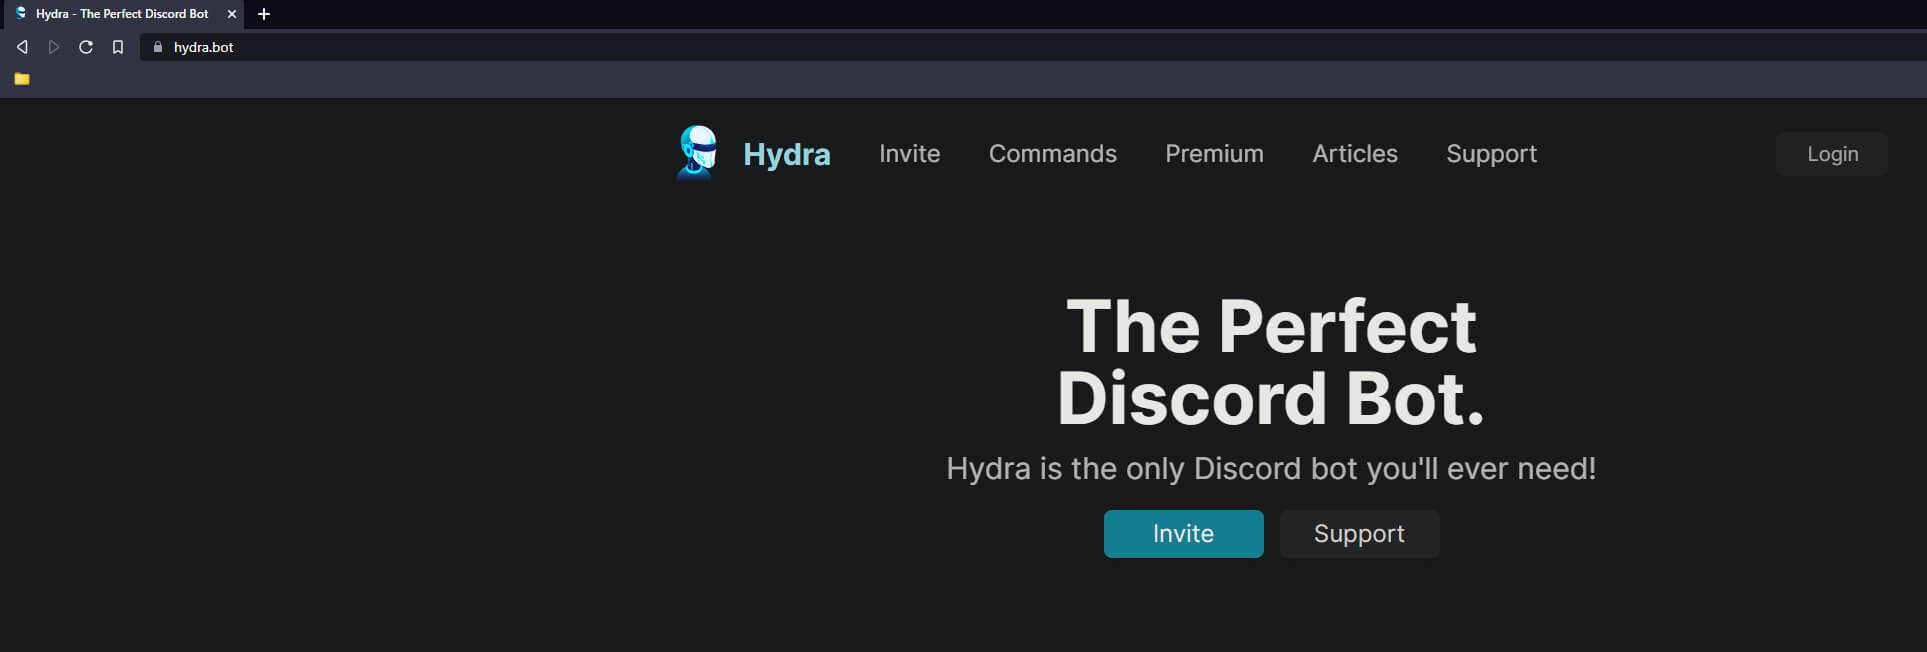 hydra bot discord set up guide